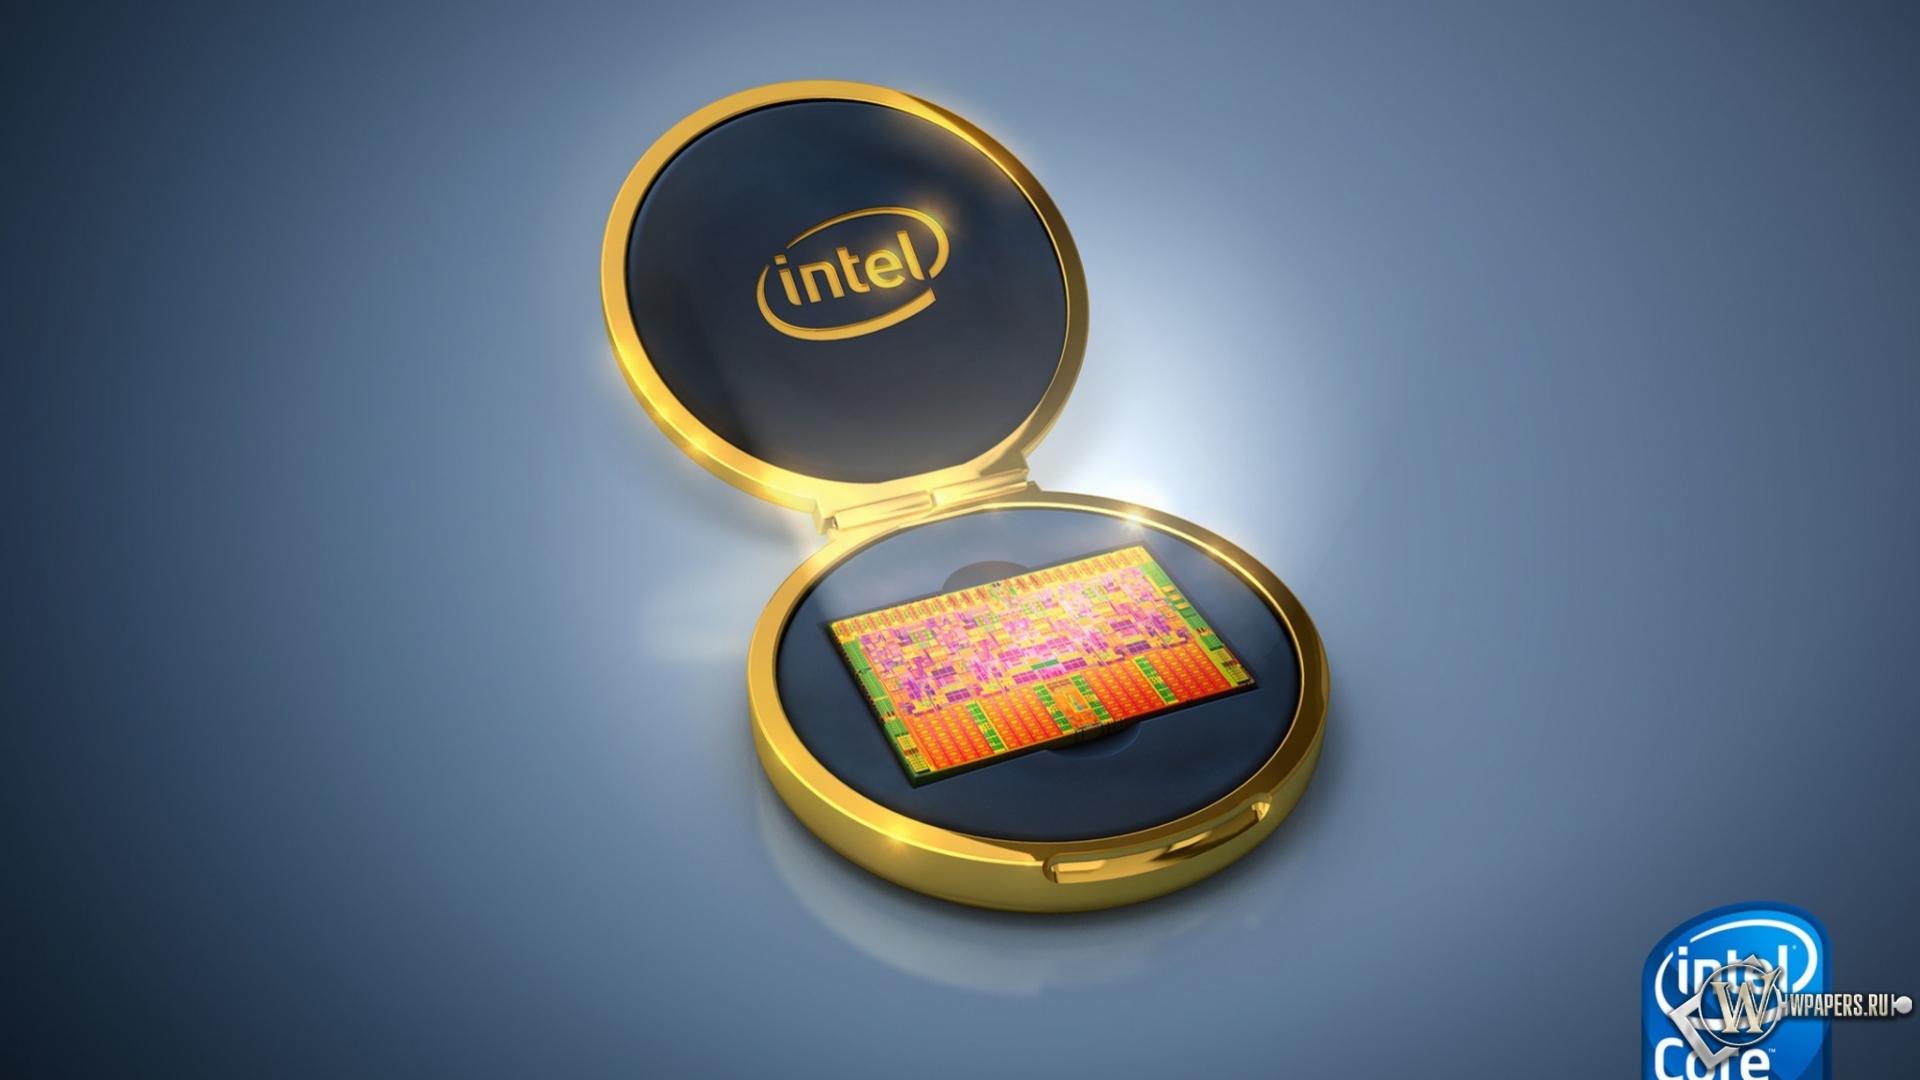 Intel Core i7 1920x1080